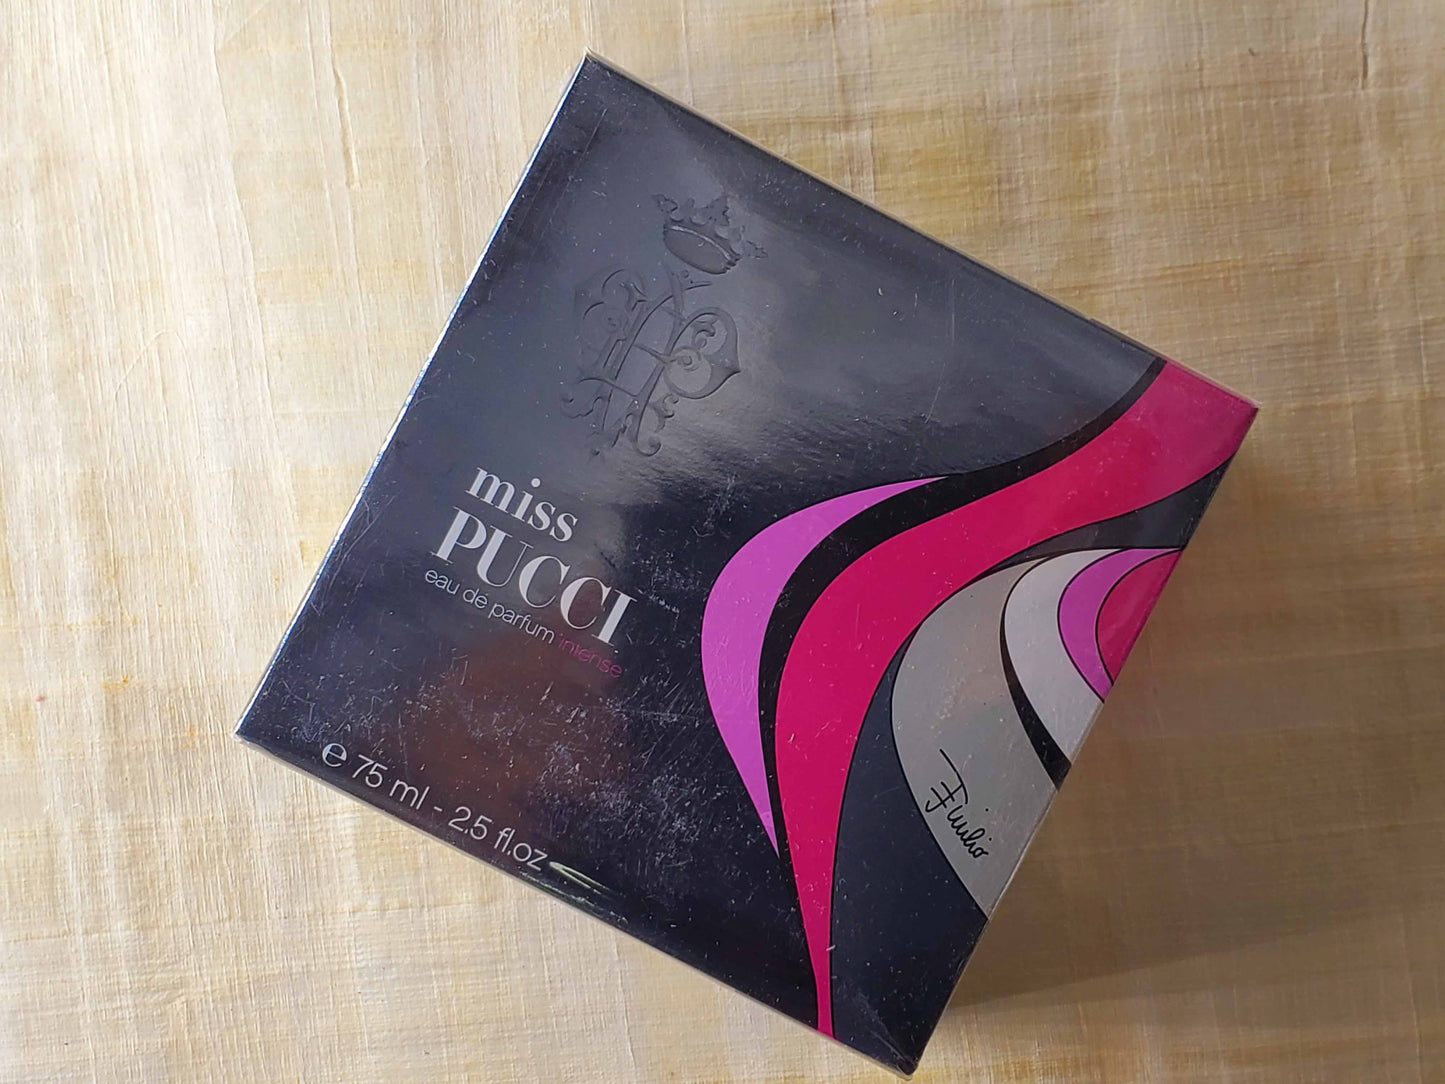 Miss Pucci Intense Emilio Pucci for women EDP Intense Spray 75 ml 2.5 oz, Rare, Vintage, Sealed